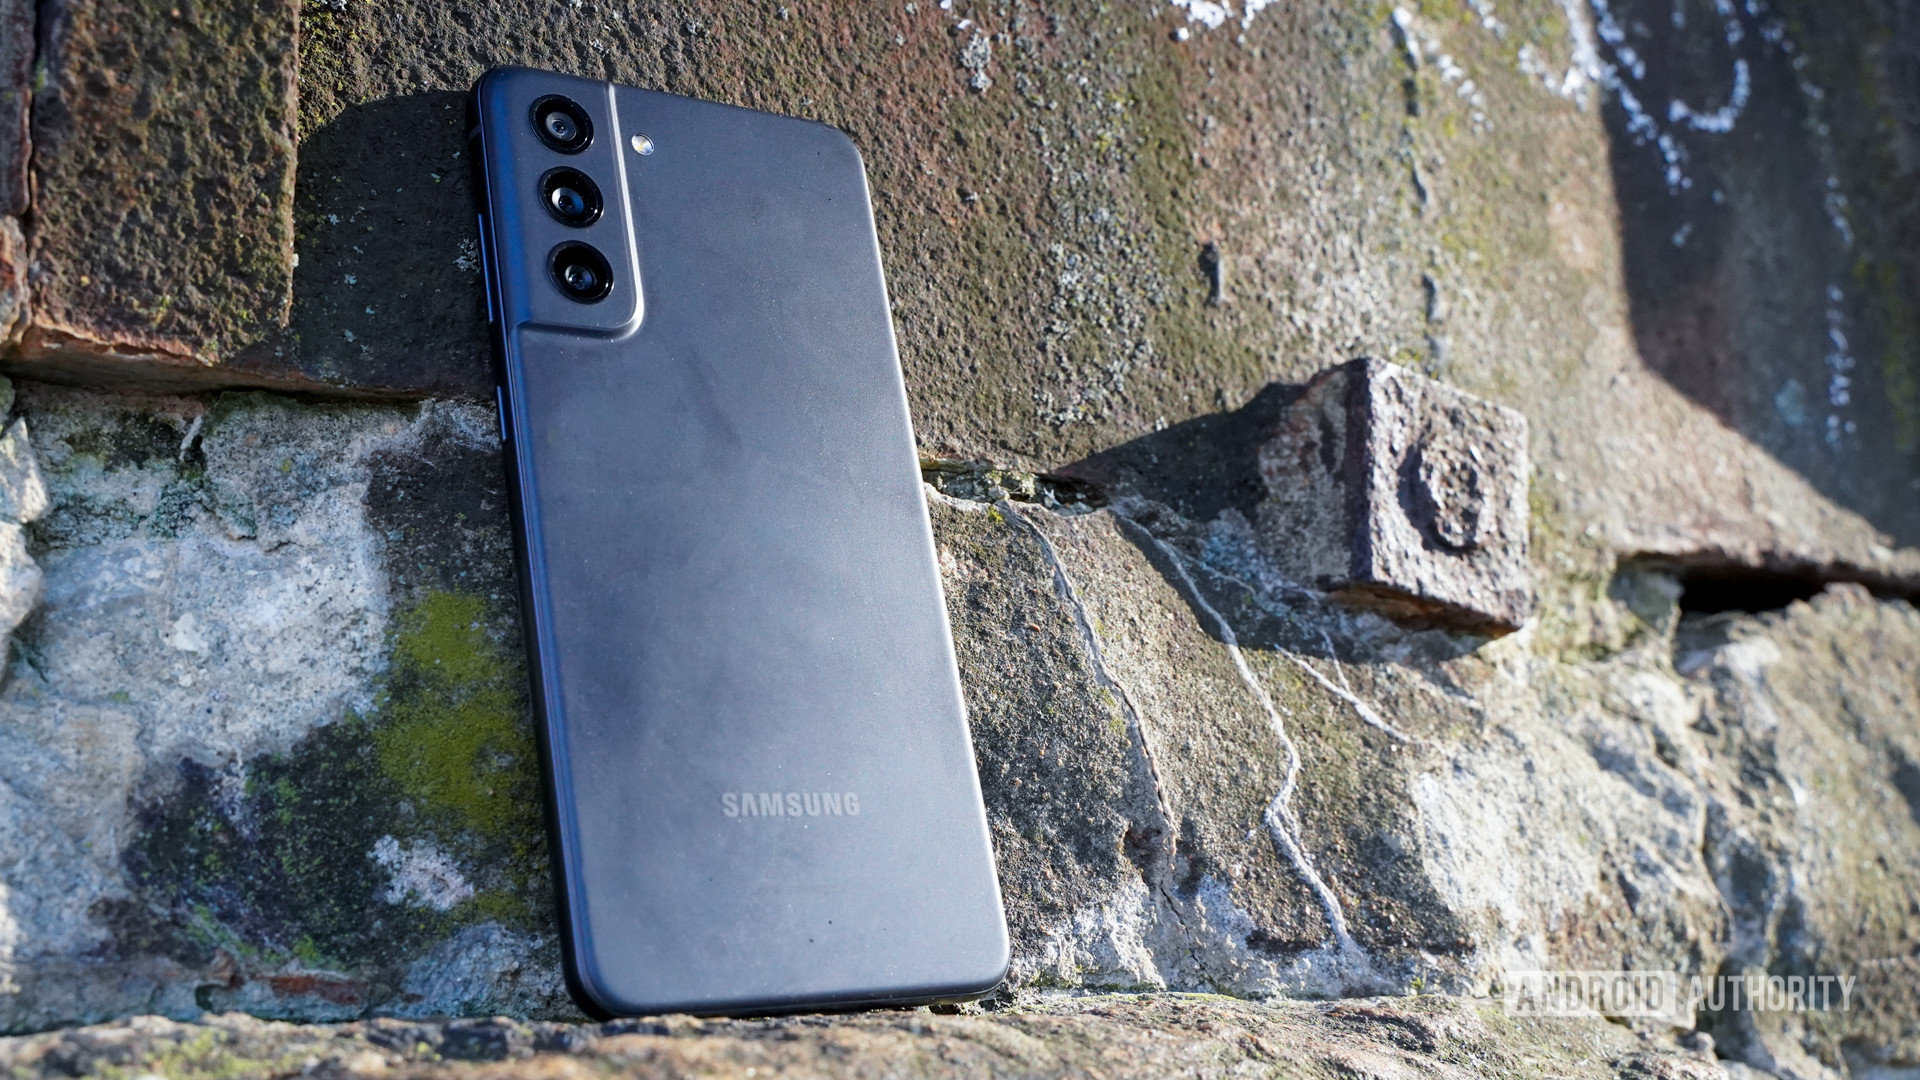 Samsung Galaxy S21 FE left rear profile on rocks